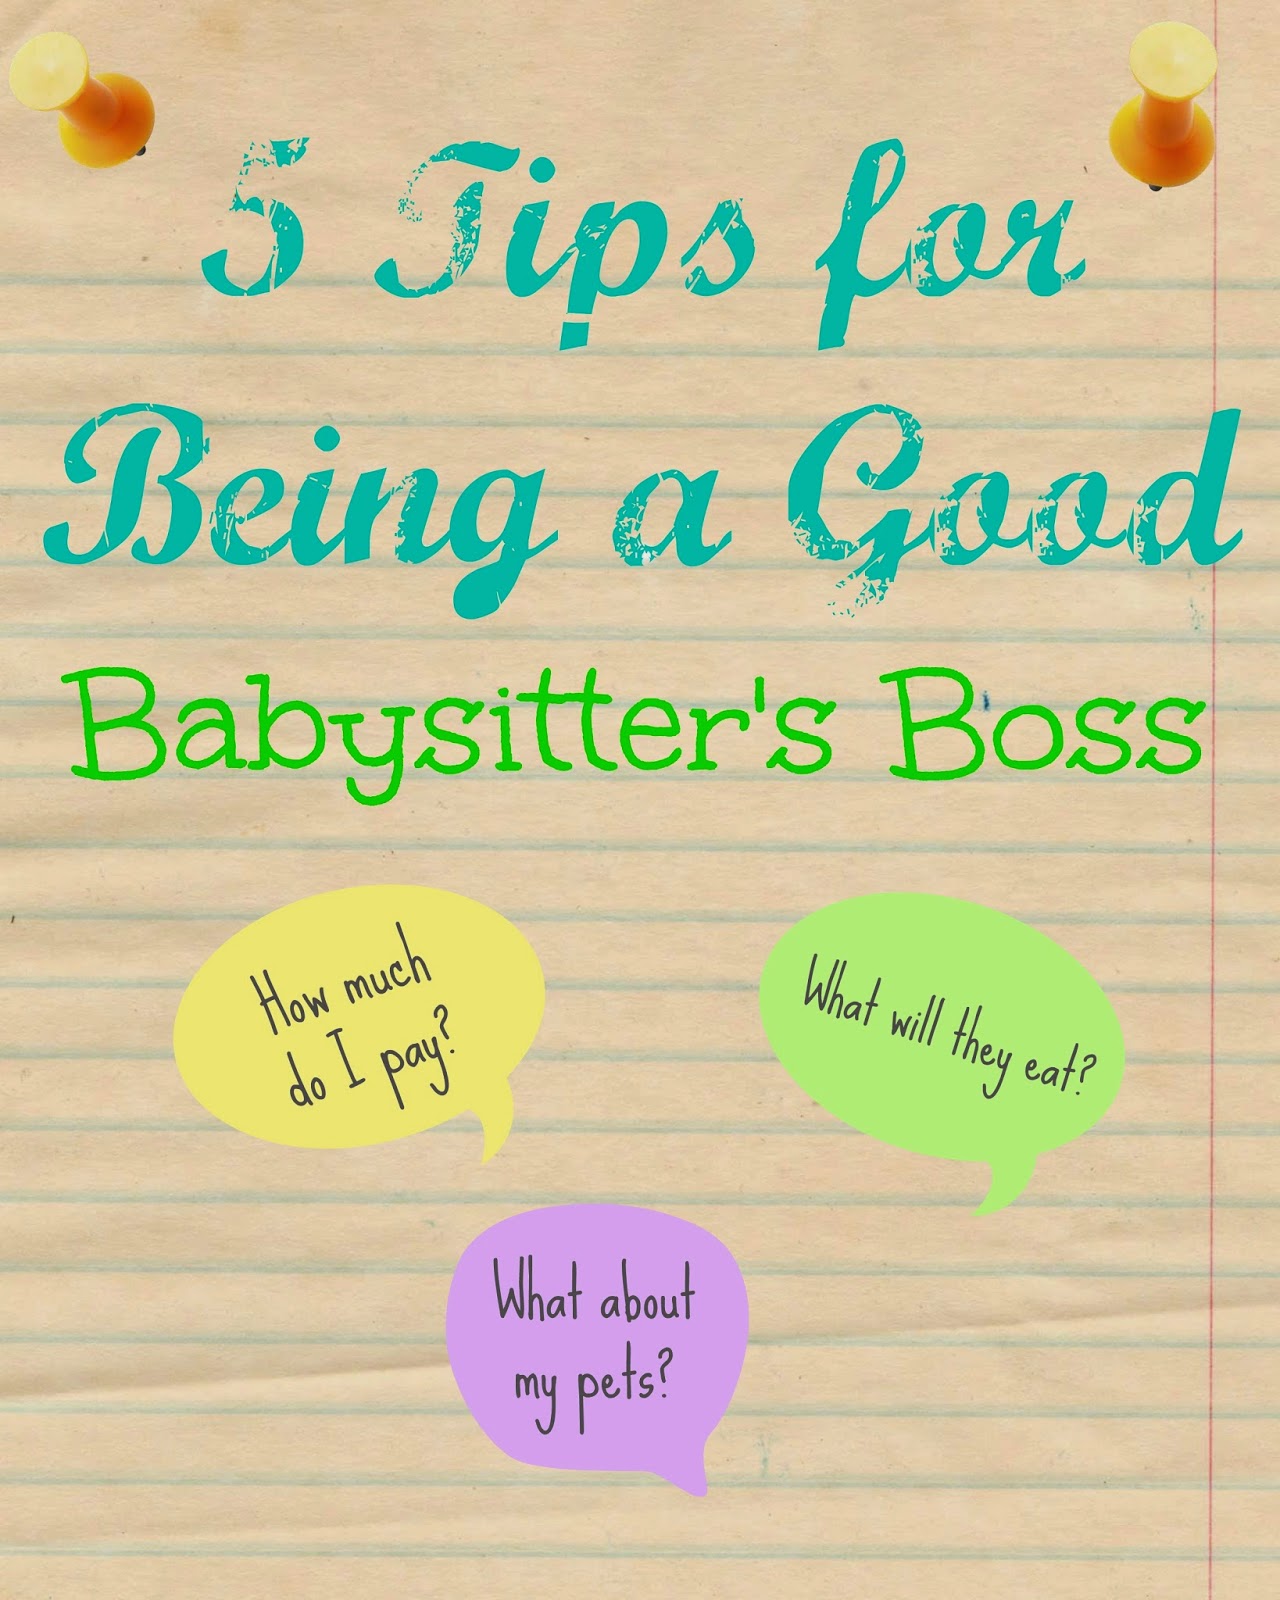 Yellow Door Diaries: 5 Tips for Being a Good Babysitter's Boss